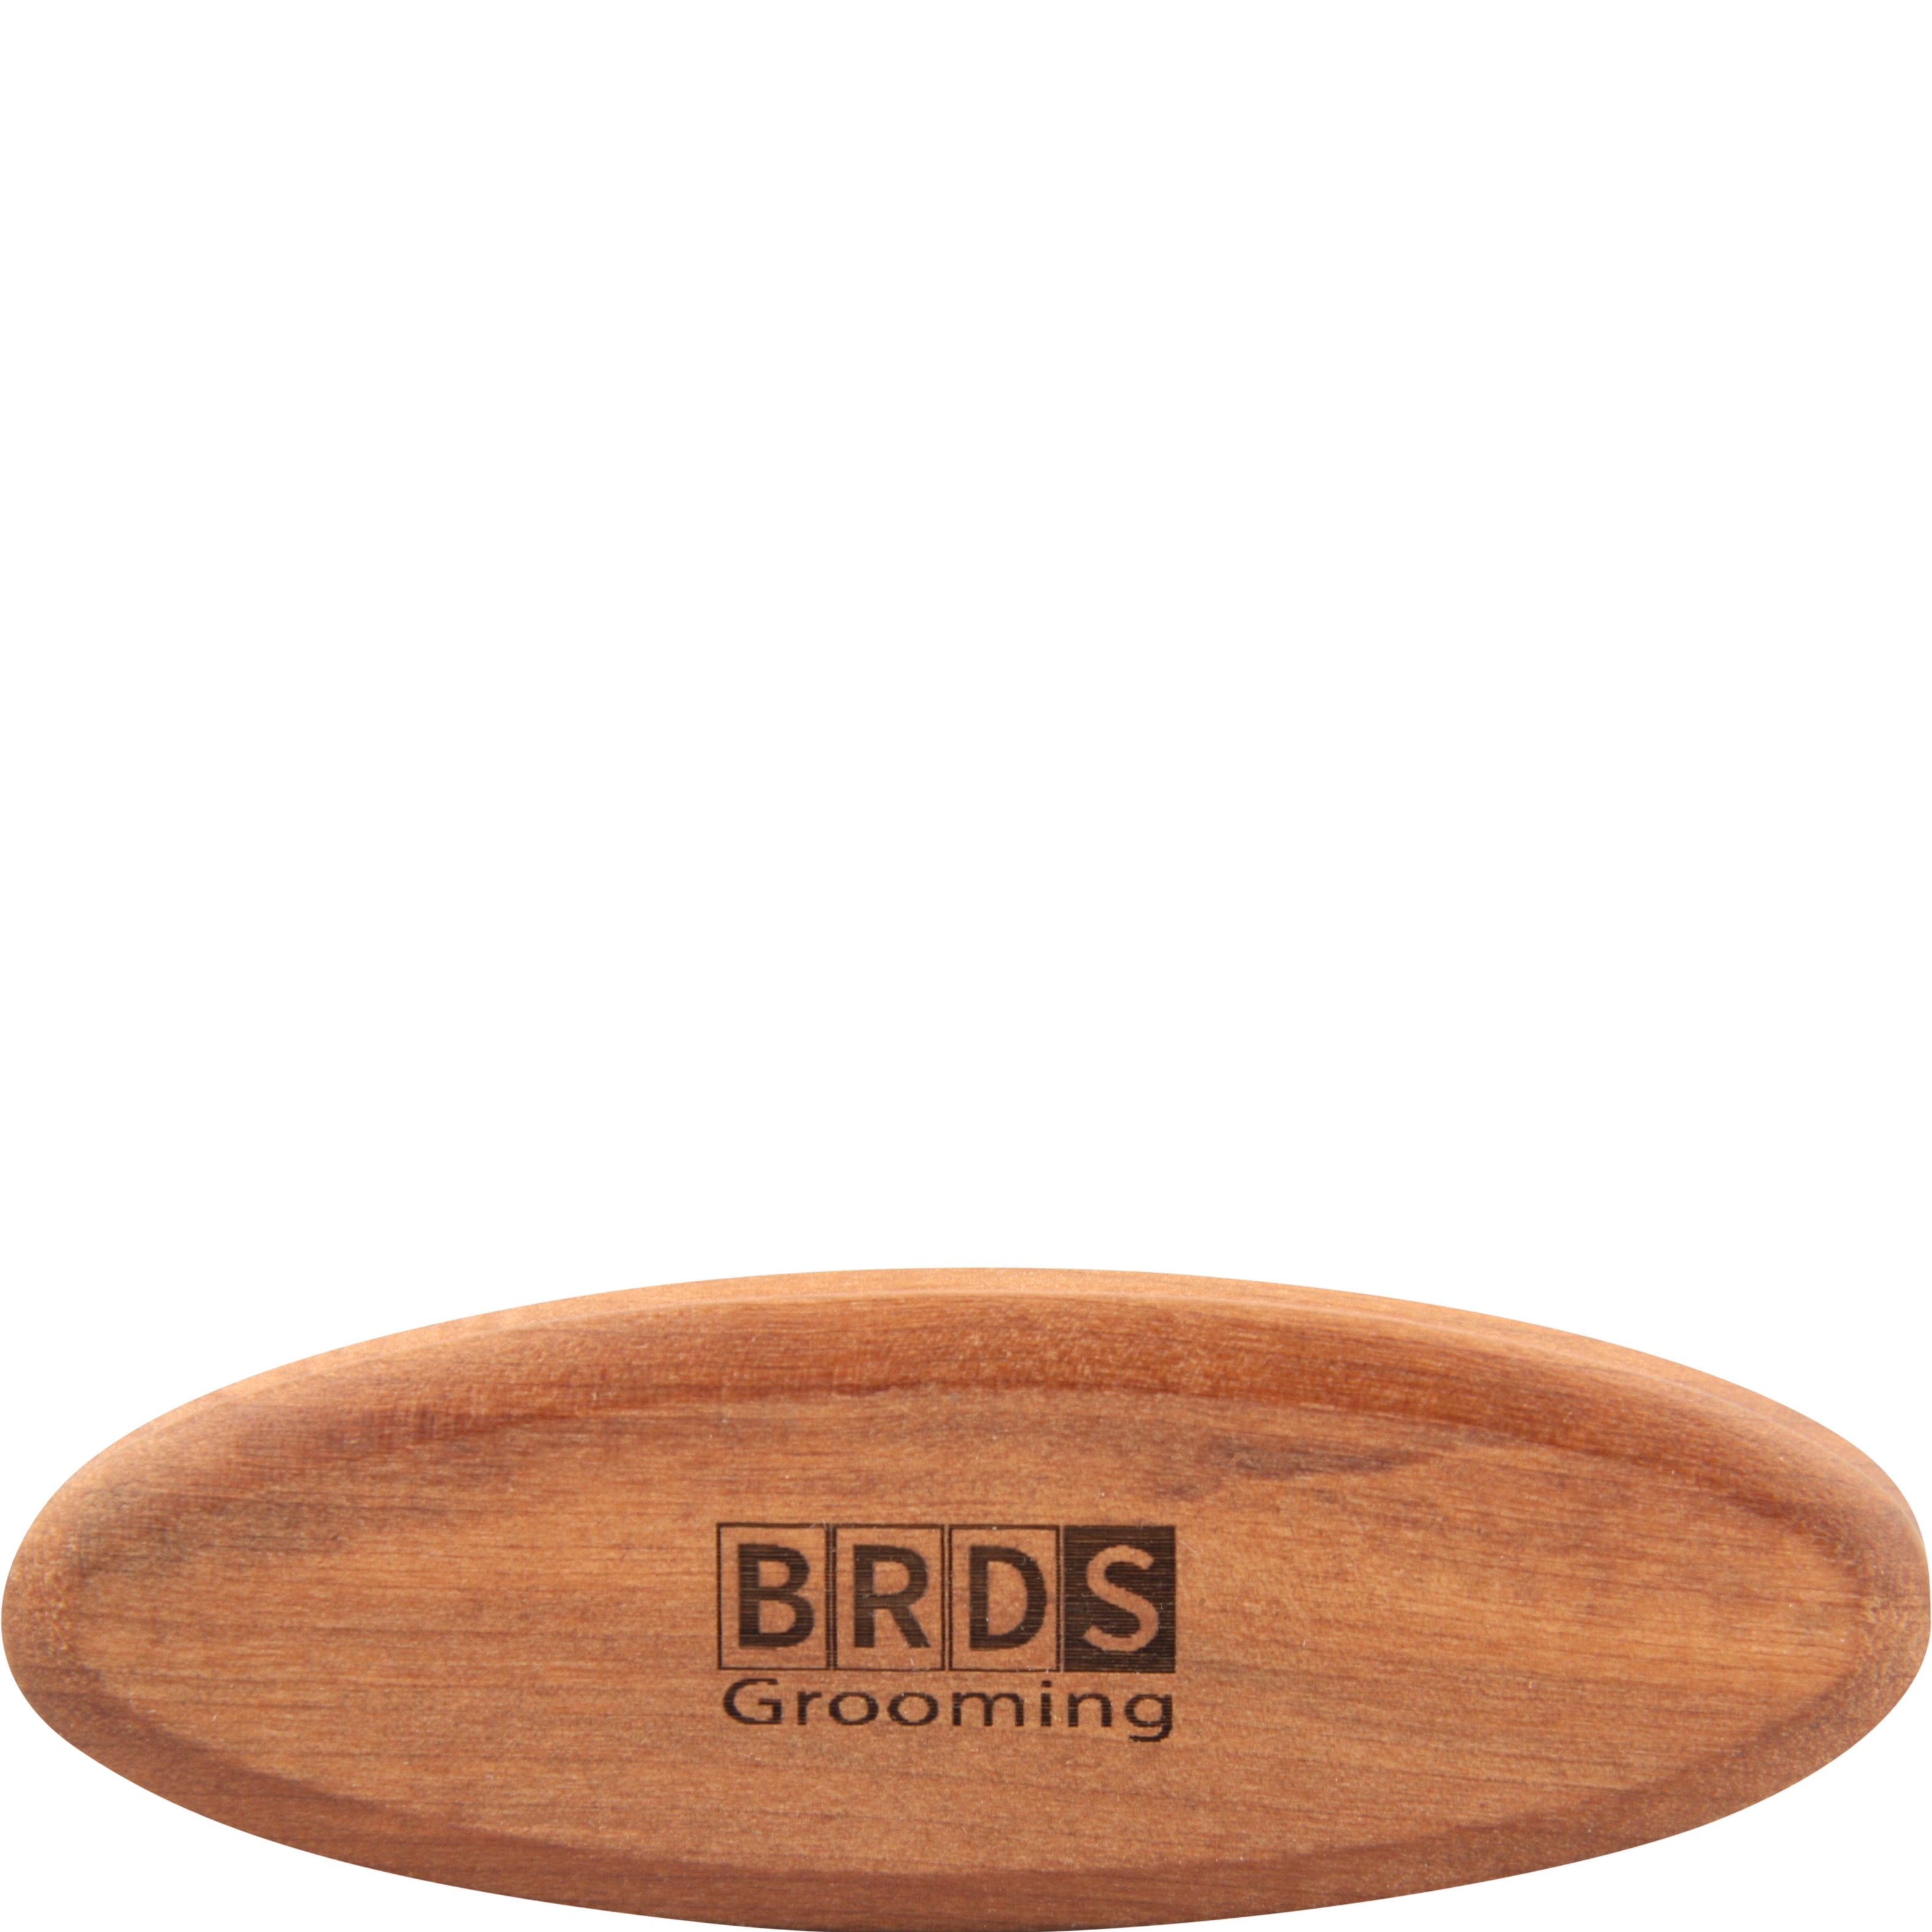 Beards Grooming Baardborstel Small Wildzwijn - 1.2 - BG-02020